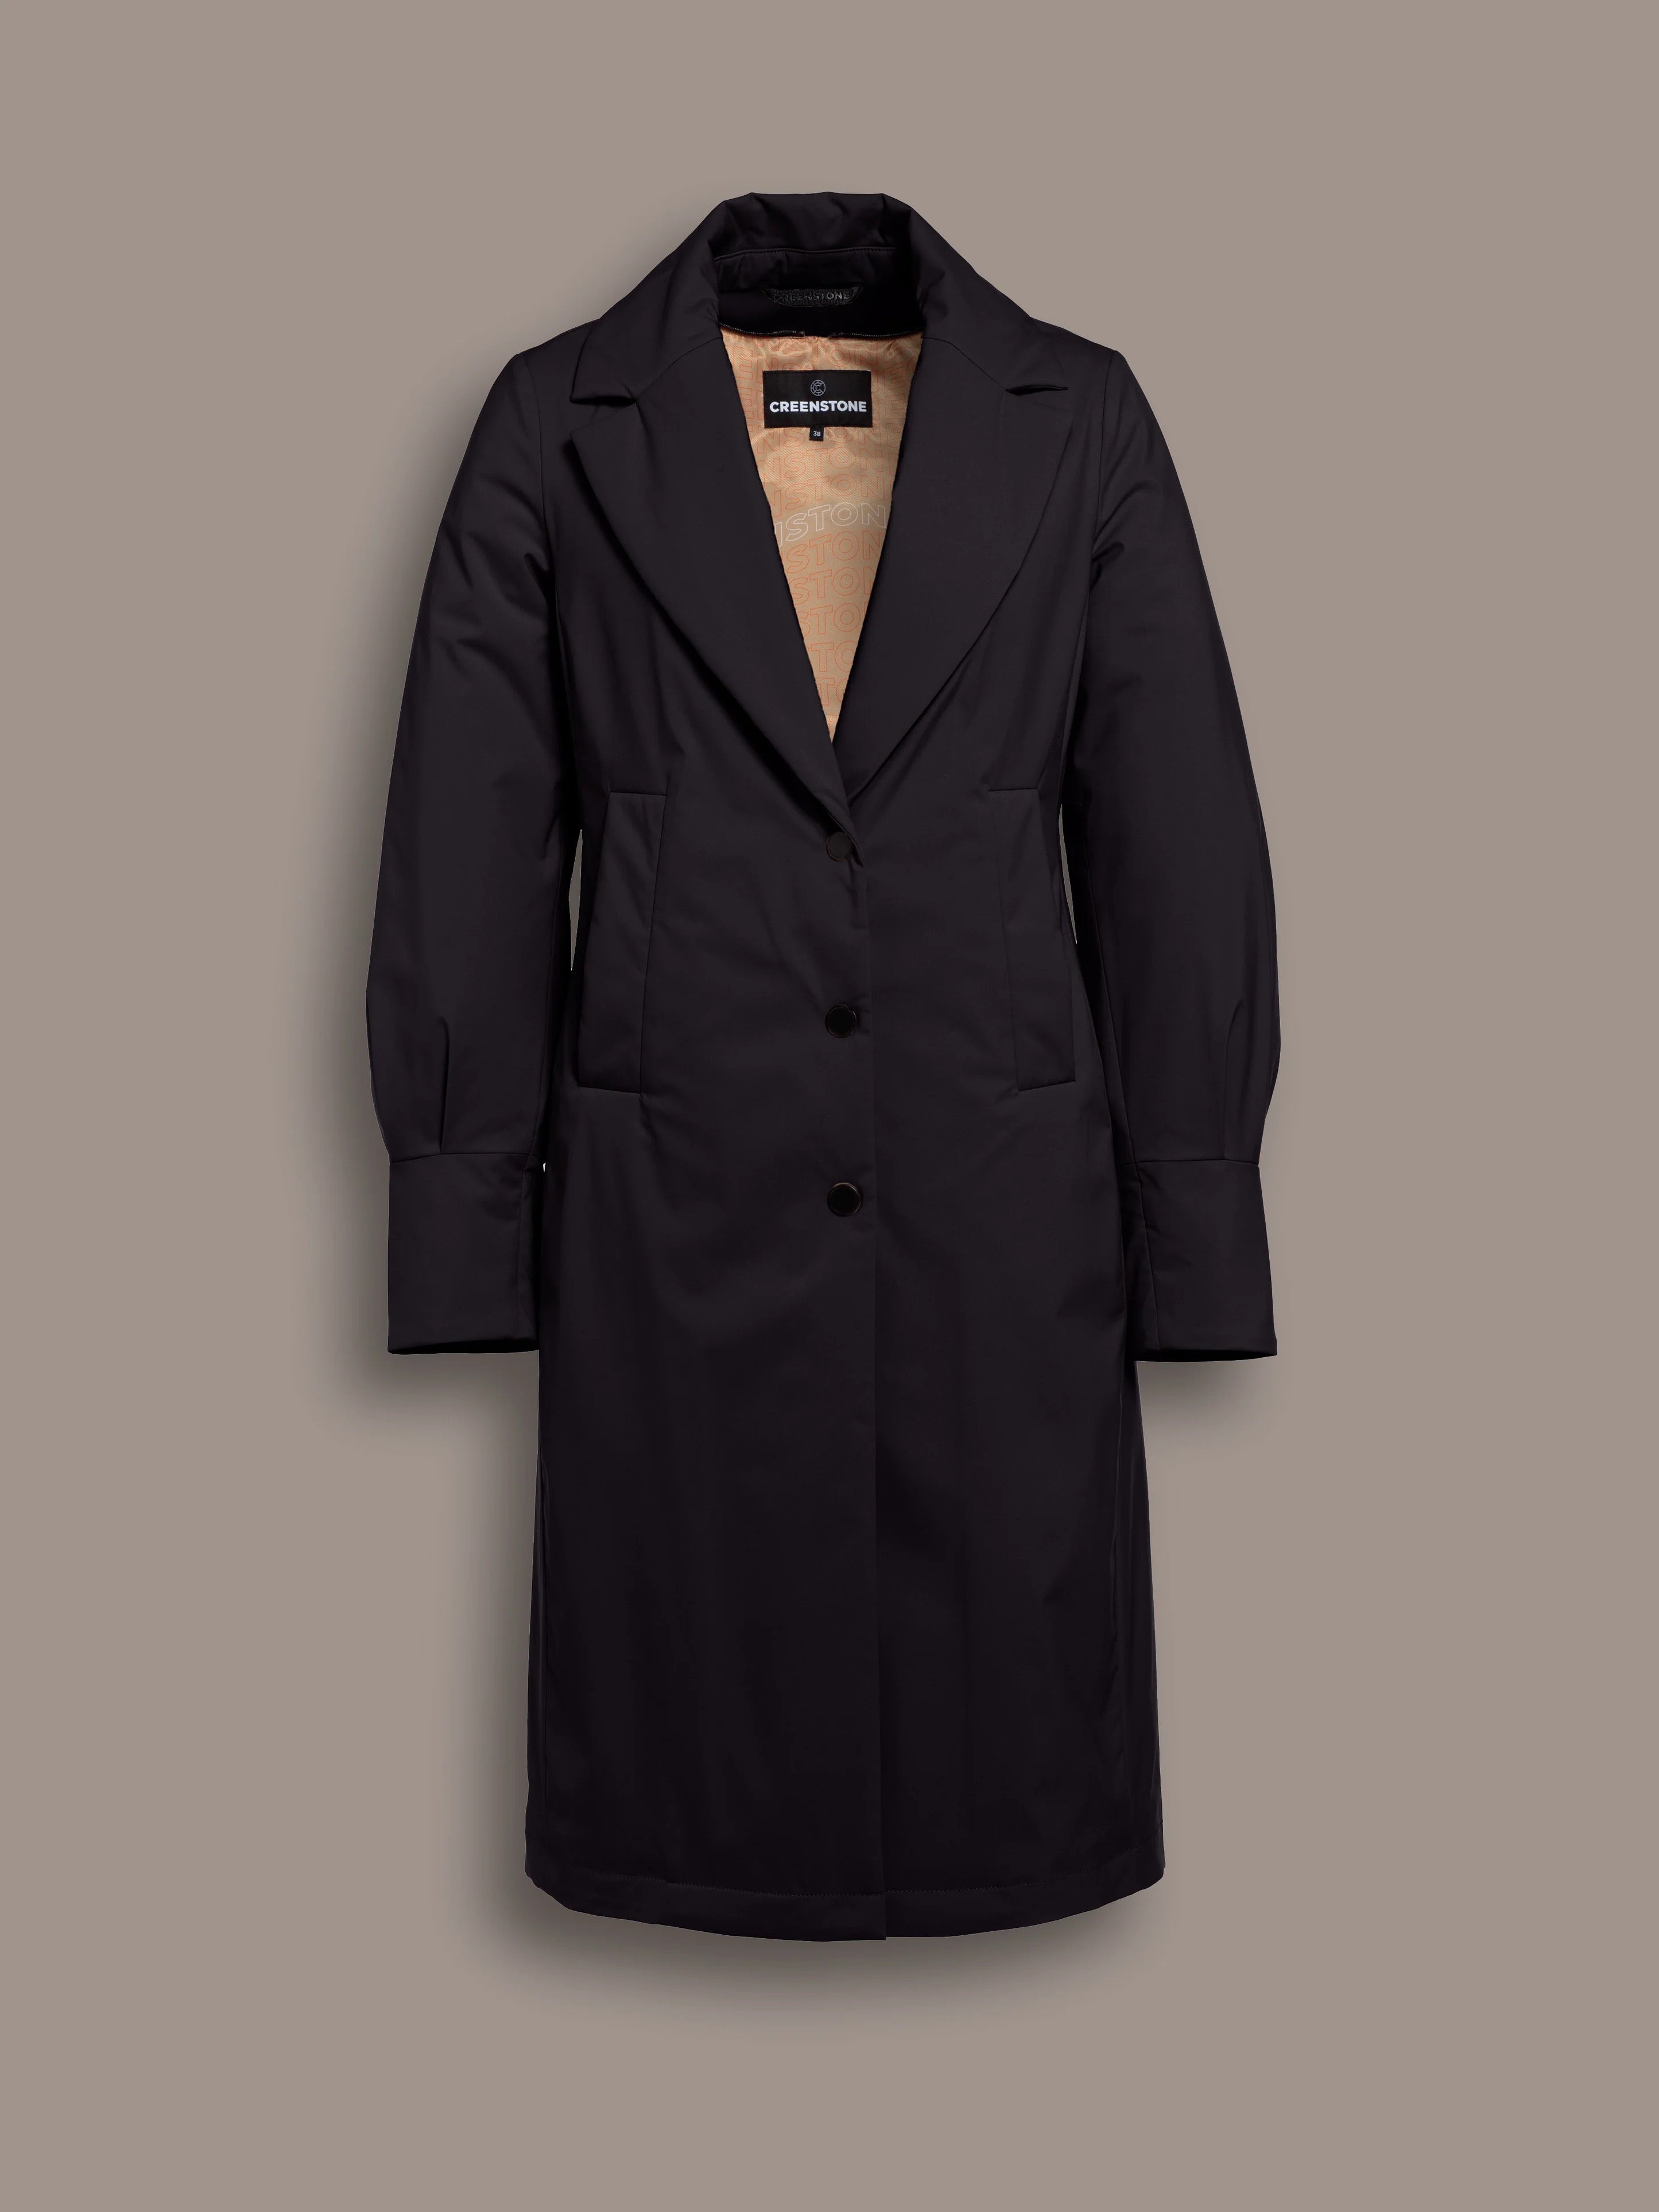 Moreen Black Lightweight Blazer Coat